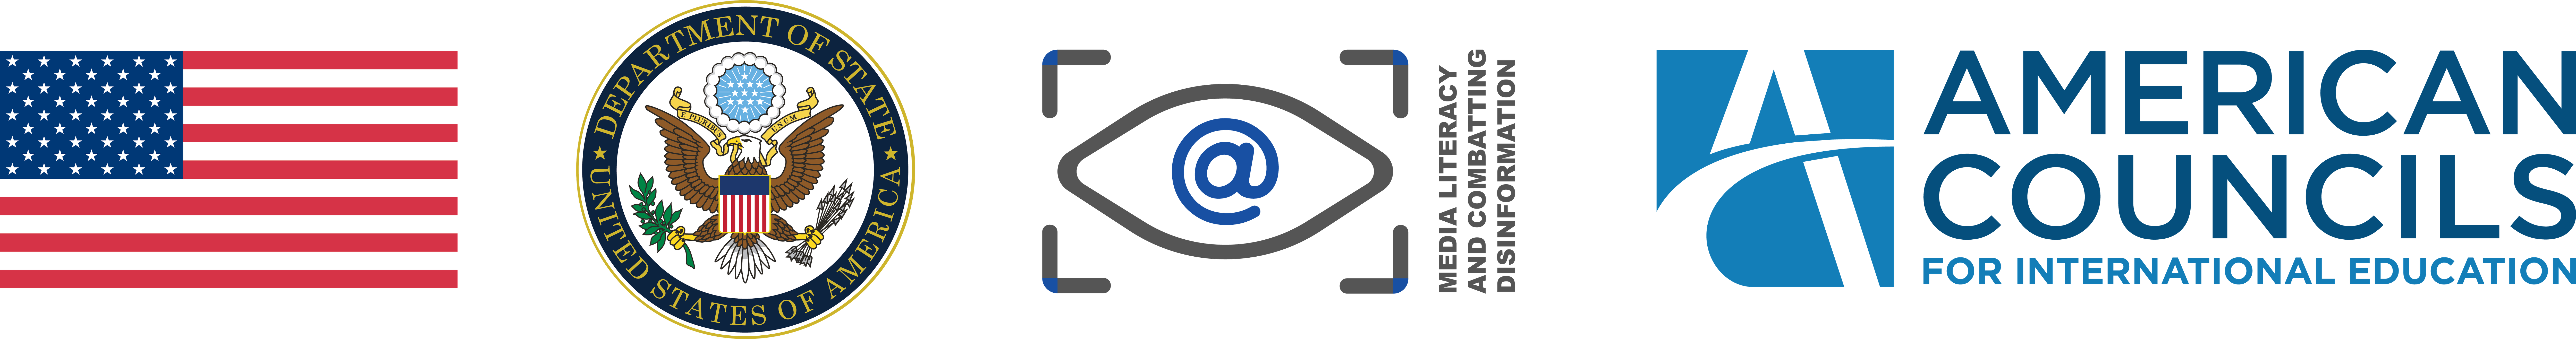 Media Literacy logo, U.S. flag, DOS logo, and American Councils logo